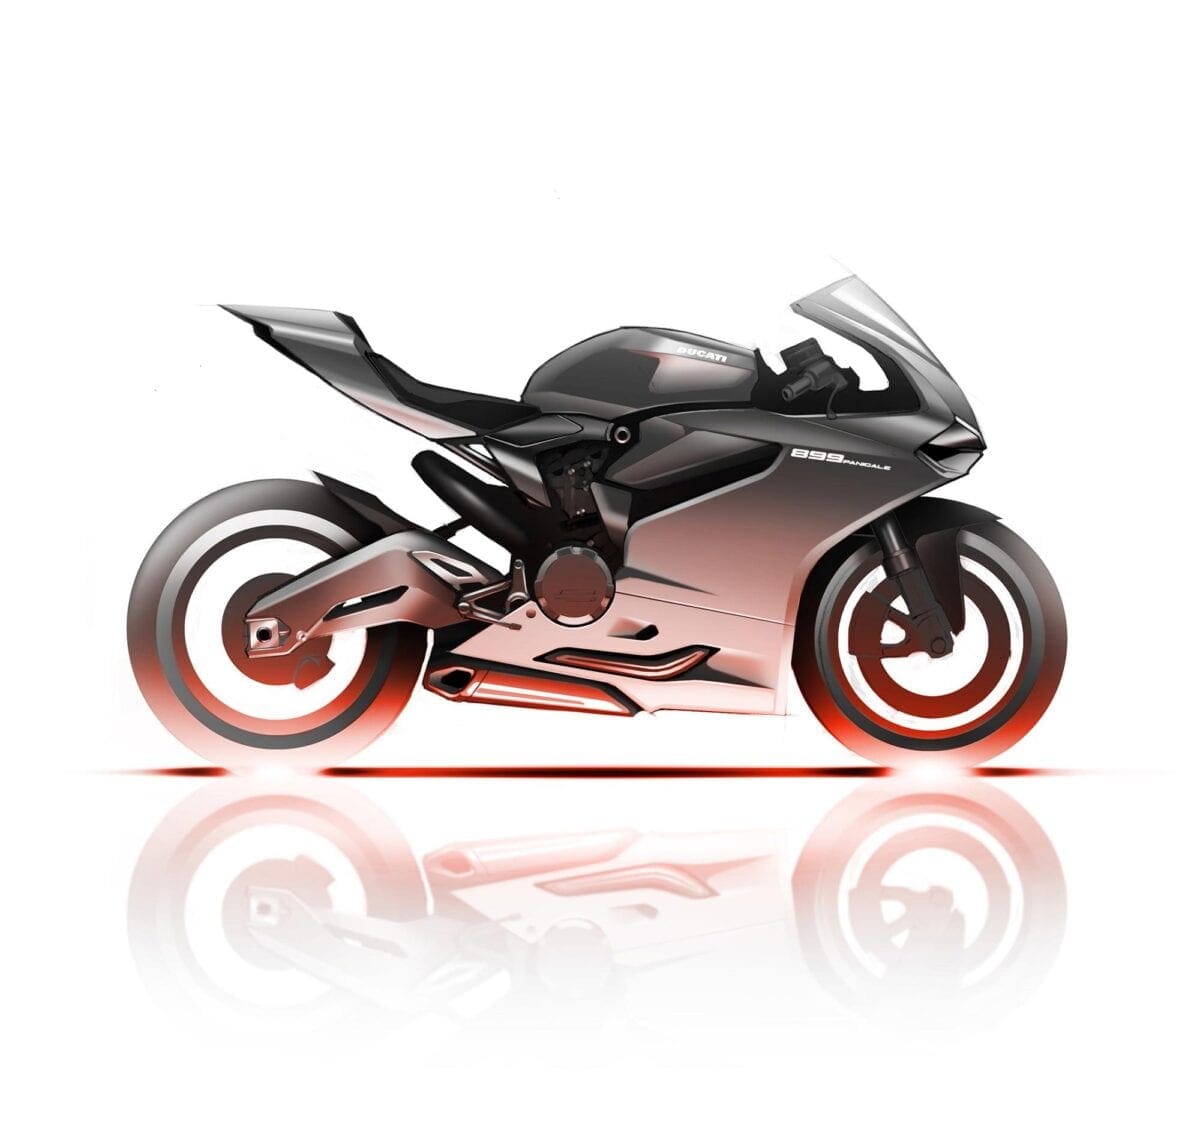 Ducati-899-Panigale-sketch